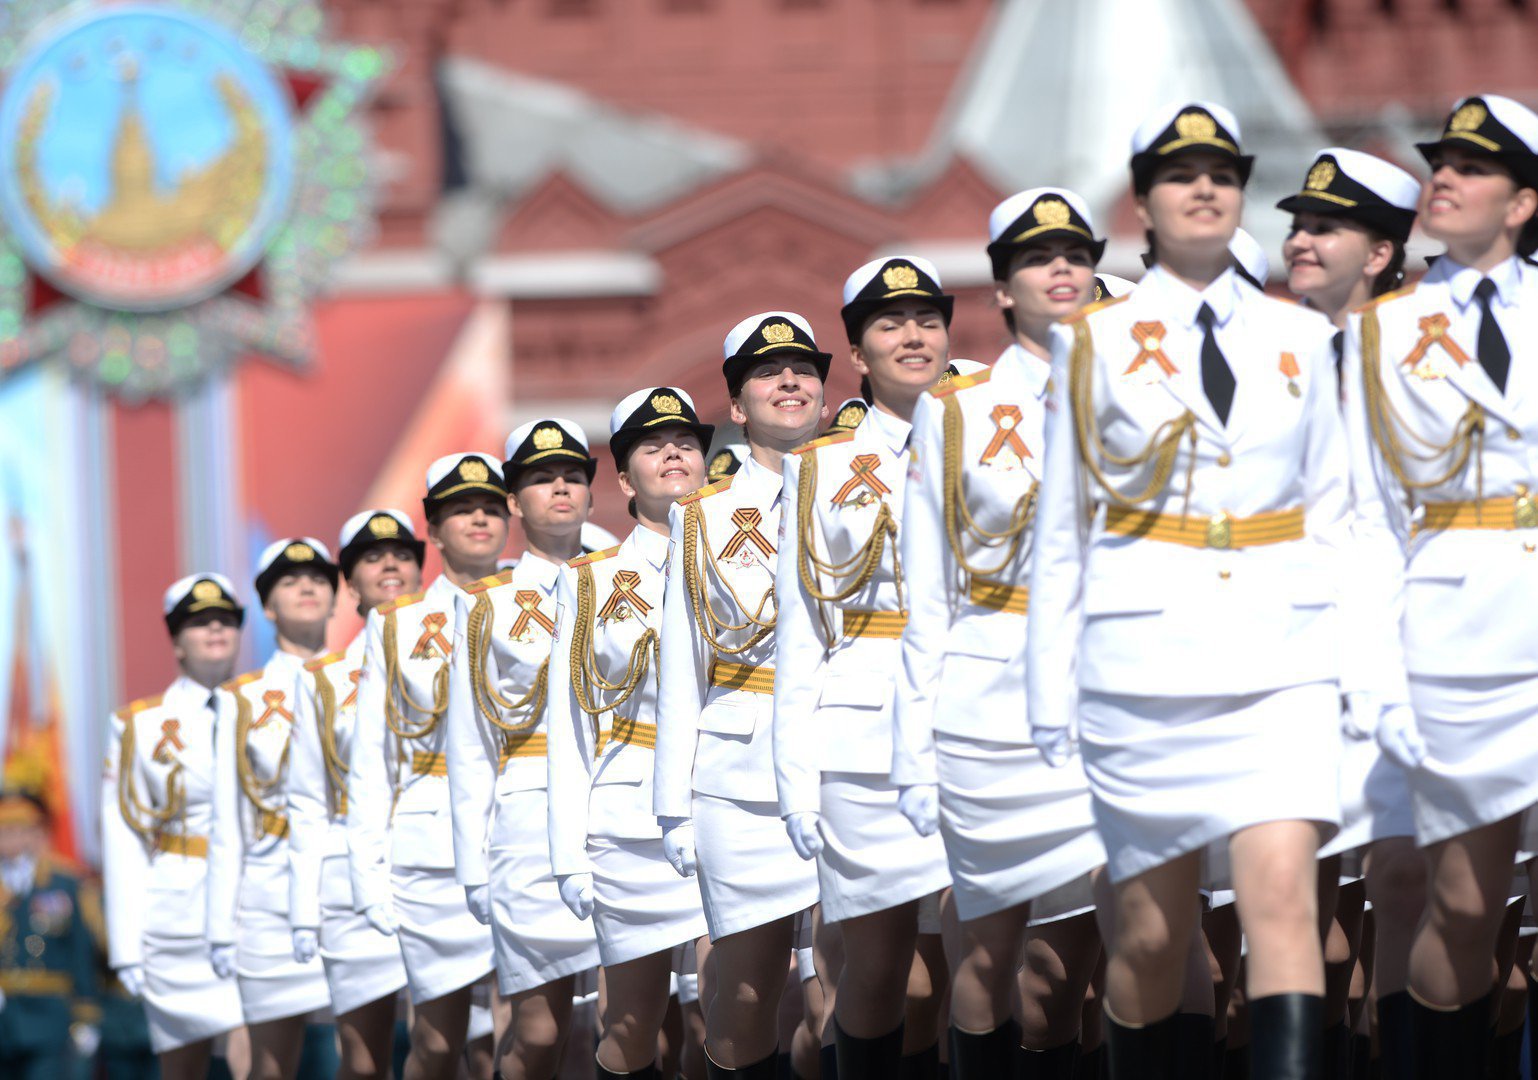 Парад офицеров. Девушки военные на параде.